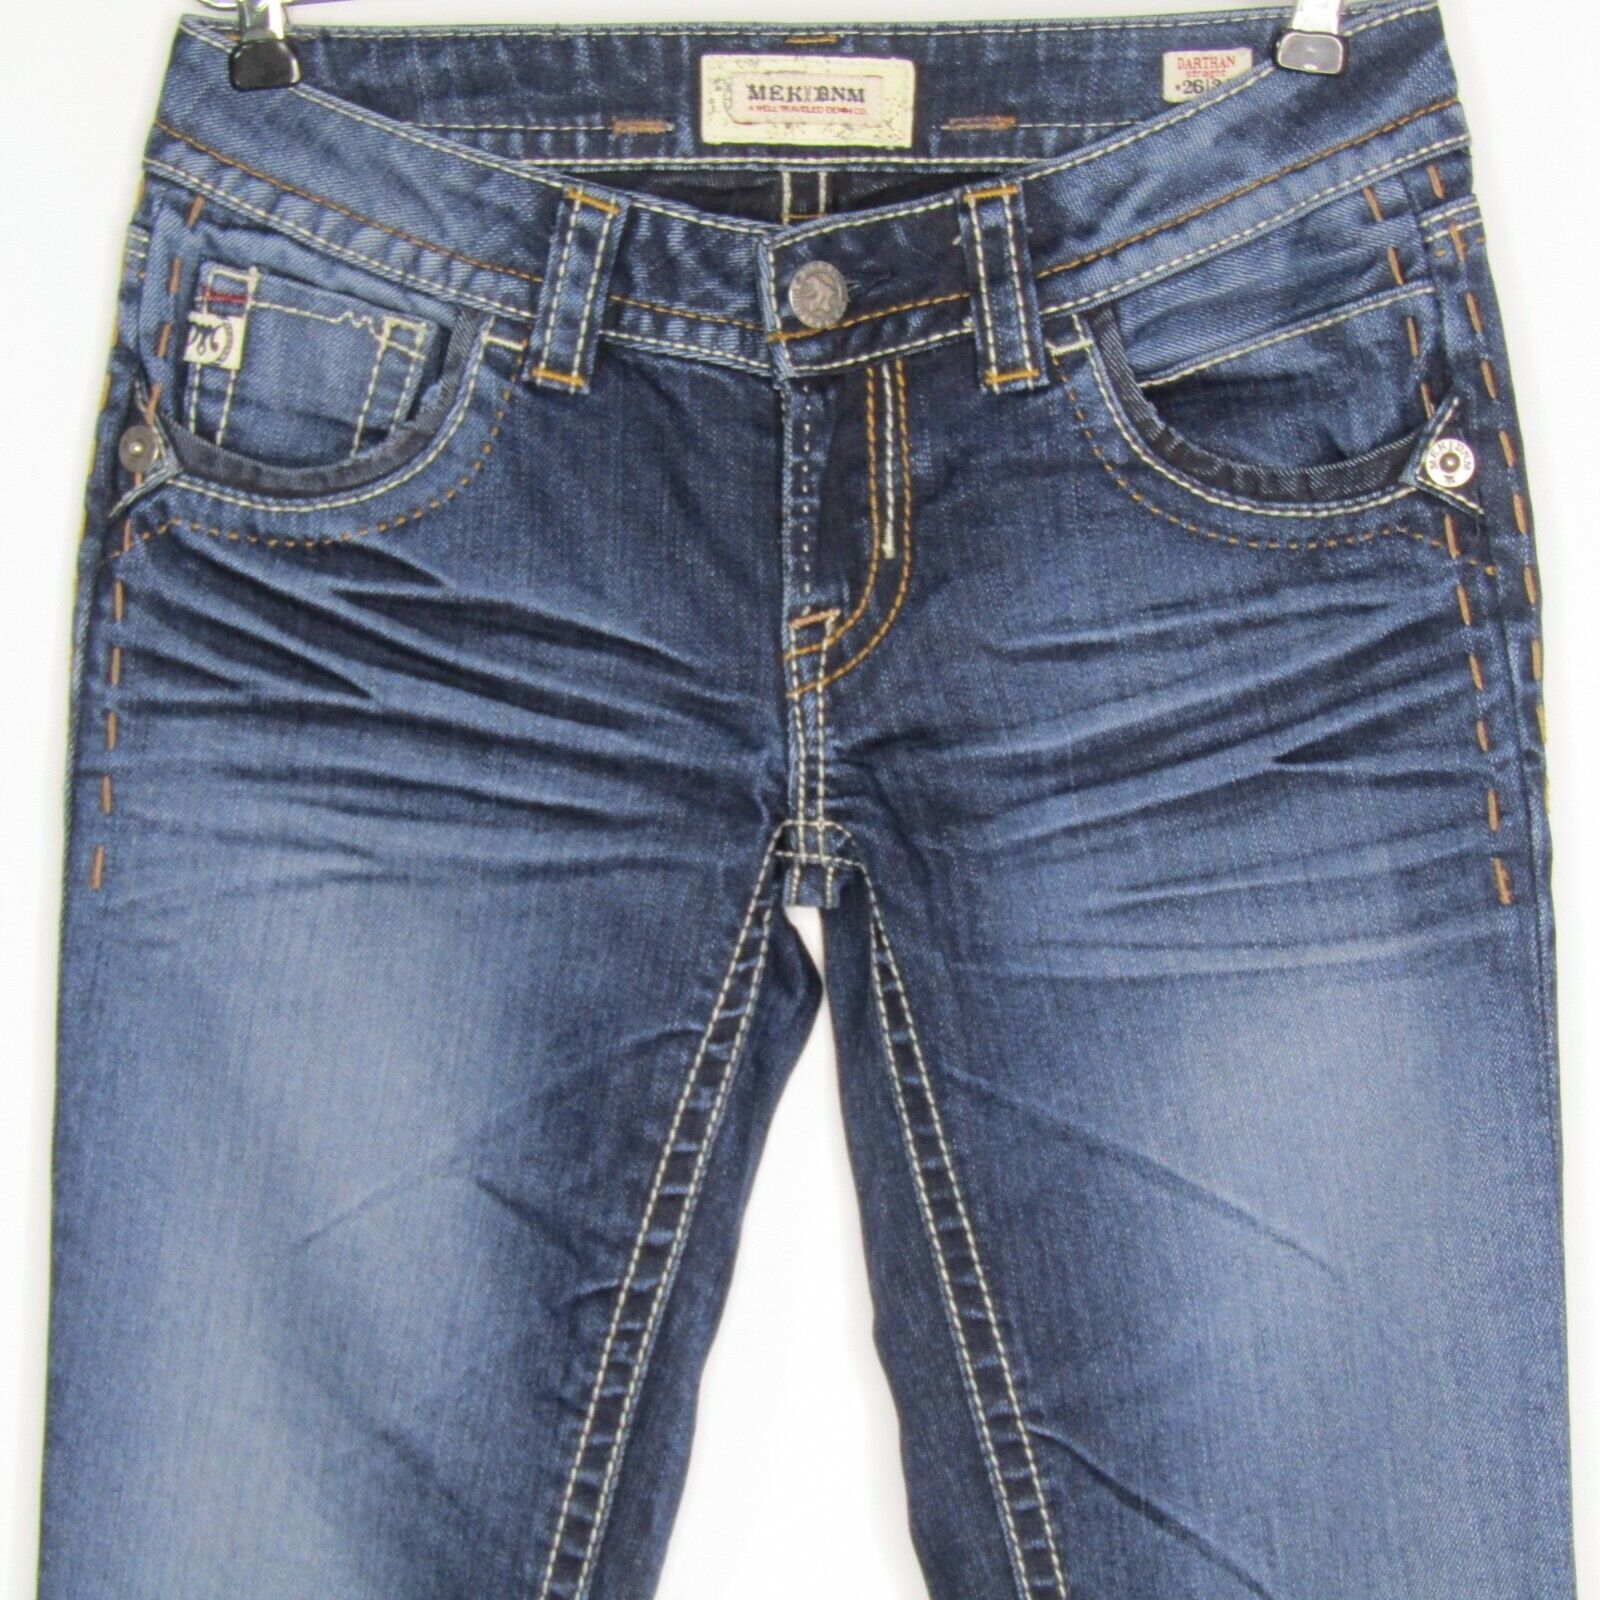 Primary image for MEK USA BNM Women's Blue Jeans Darthan Straight Size 26/34